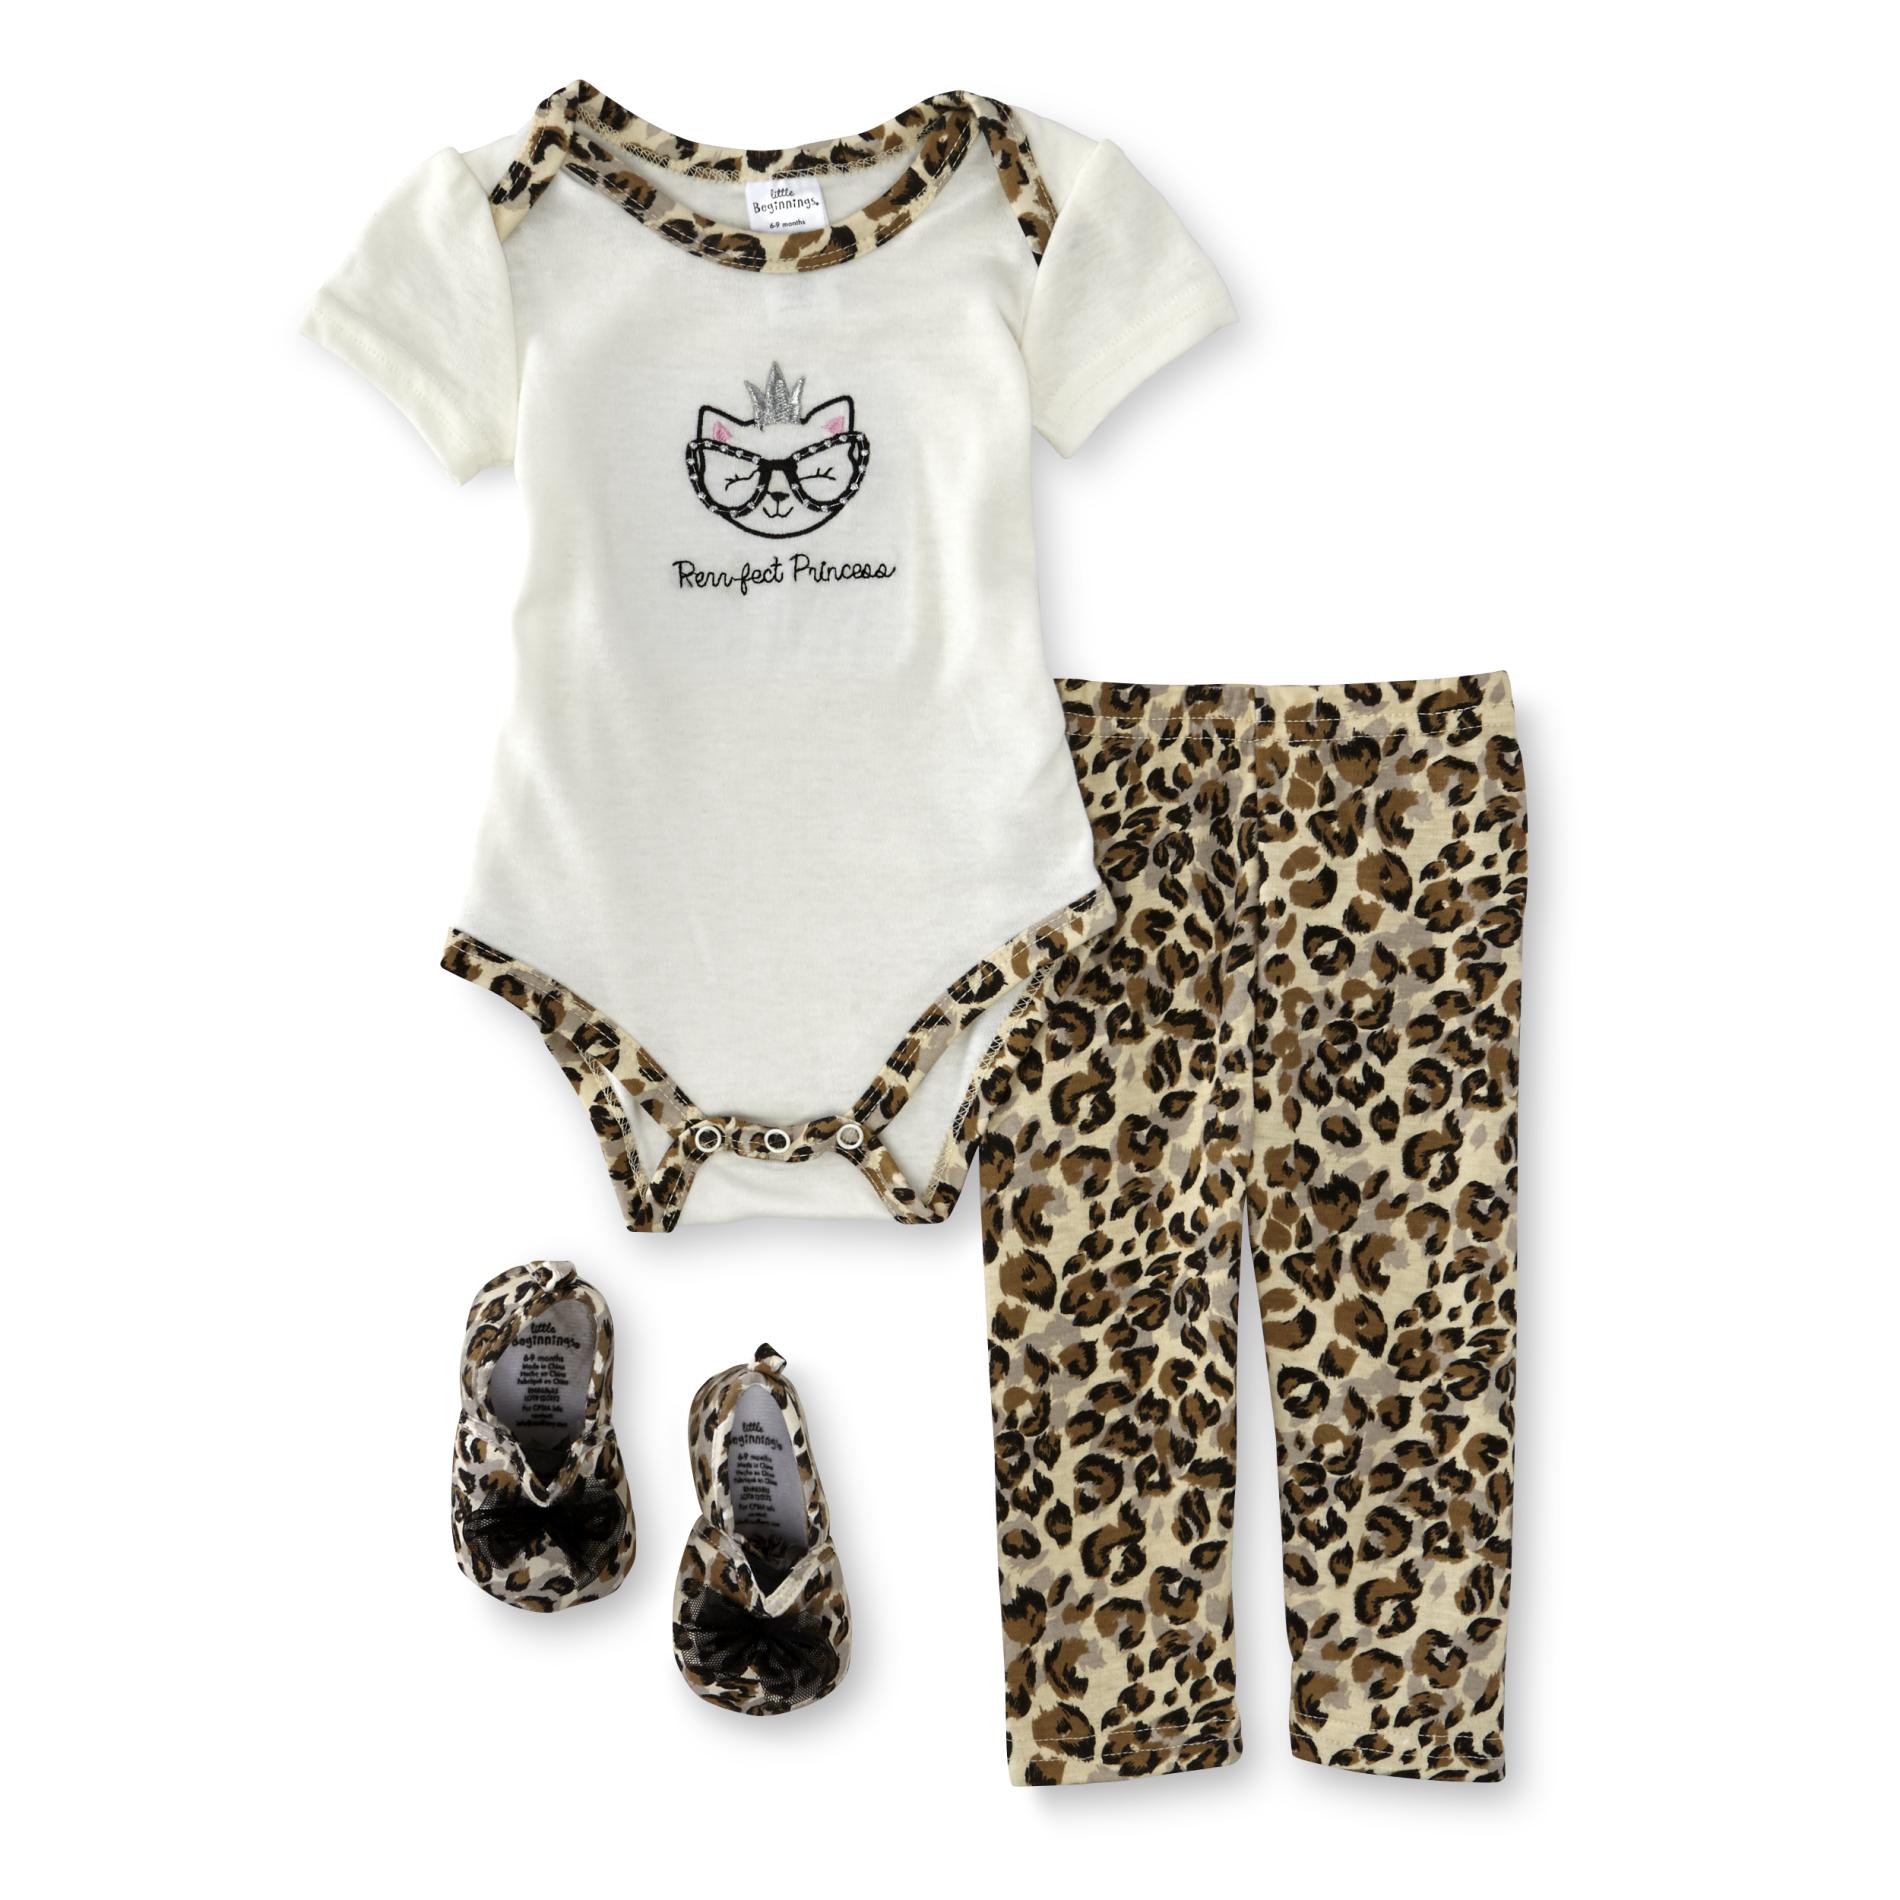 Cudlie Infant Girls' Bodysuit, Leggings & Crib Shoes - Leopard